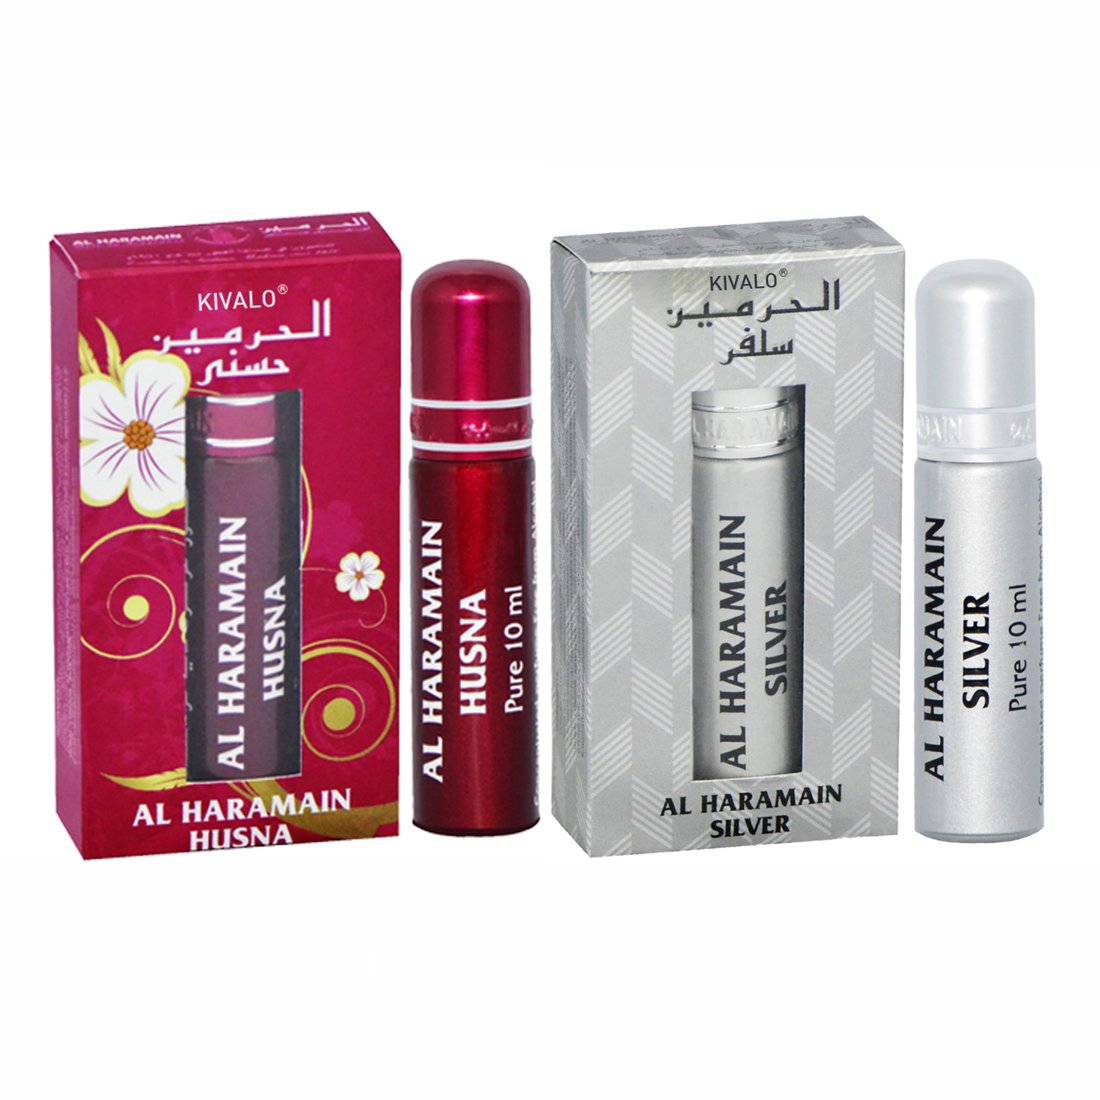 Al Haramain Husana & Silver Fragrance Pure Original Roll On Attar Combo Pack of 2 x 10 ml